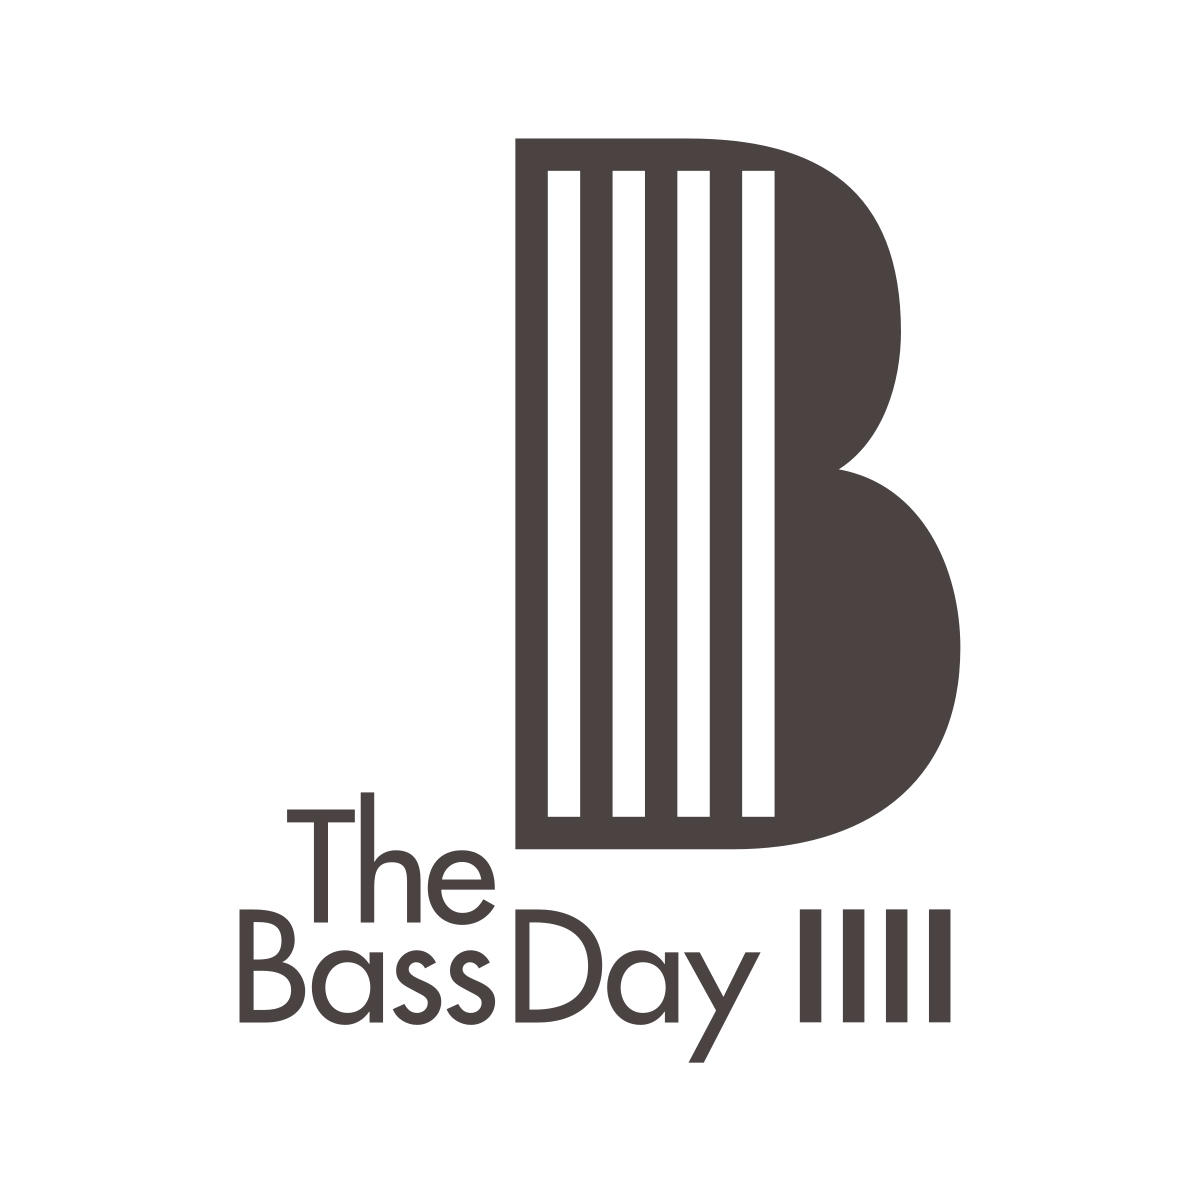 thebassday_logo_1200.jpg